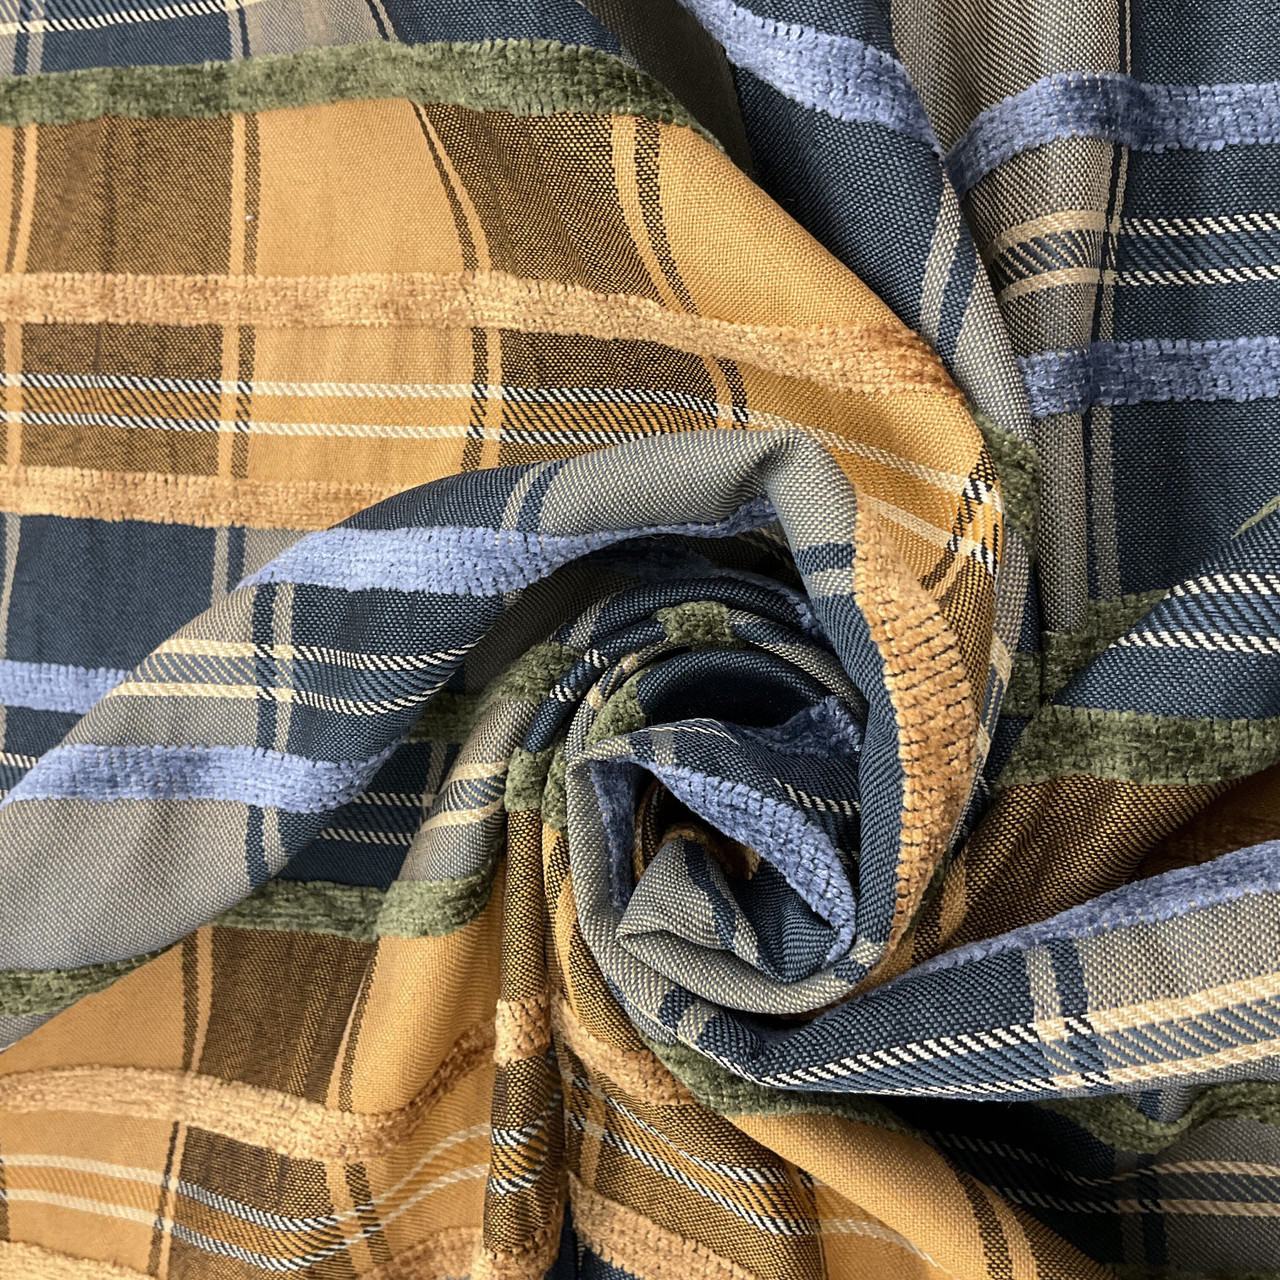 Striped Raised Chenille Velvet in Dark Blue and Brown, R-DIXON BLUESTONE, Upholstery  Fabric, Regal Fabrics Brand, 54 inch Wide